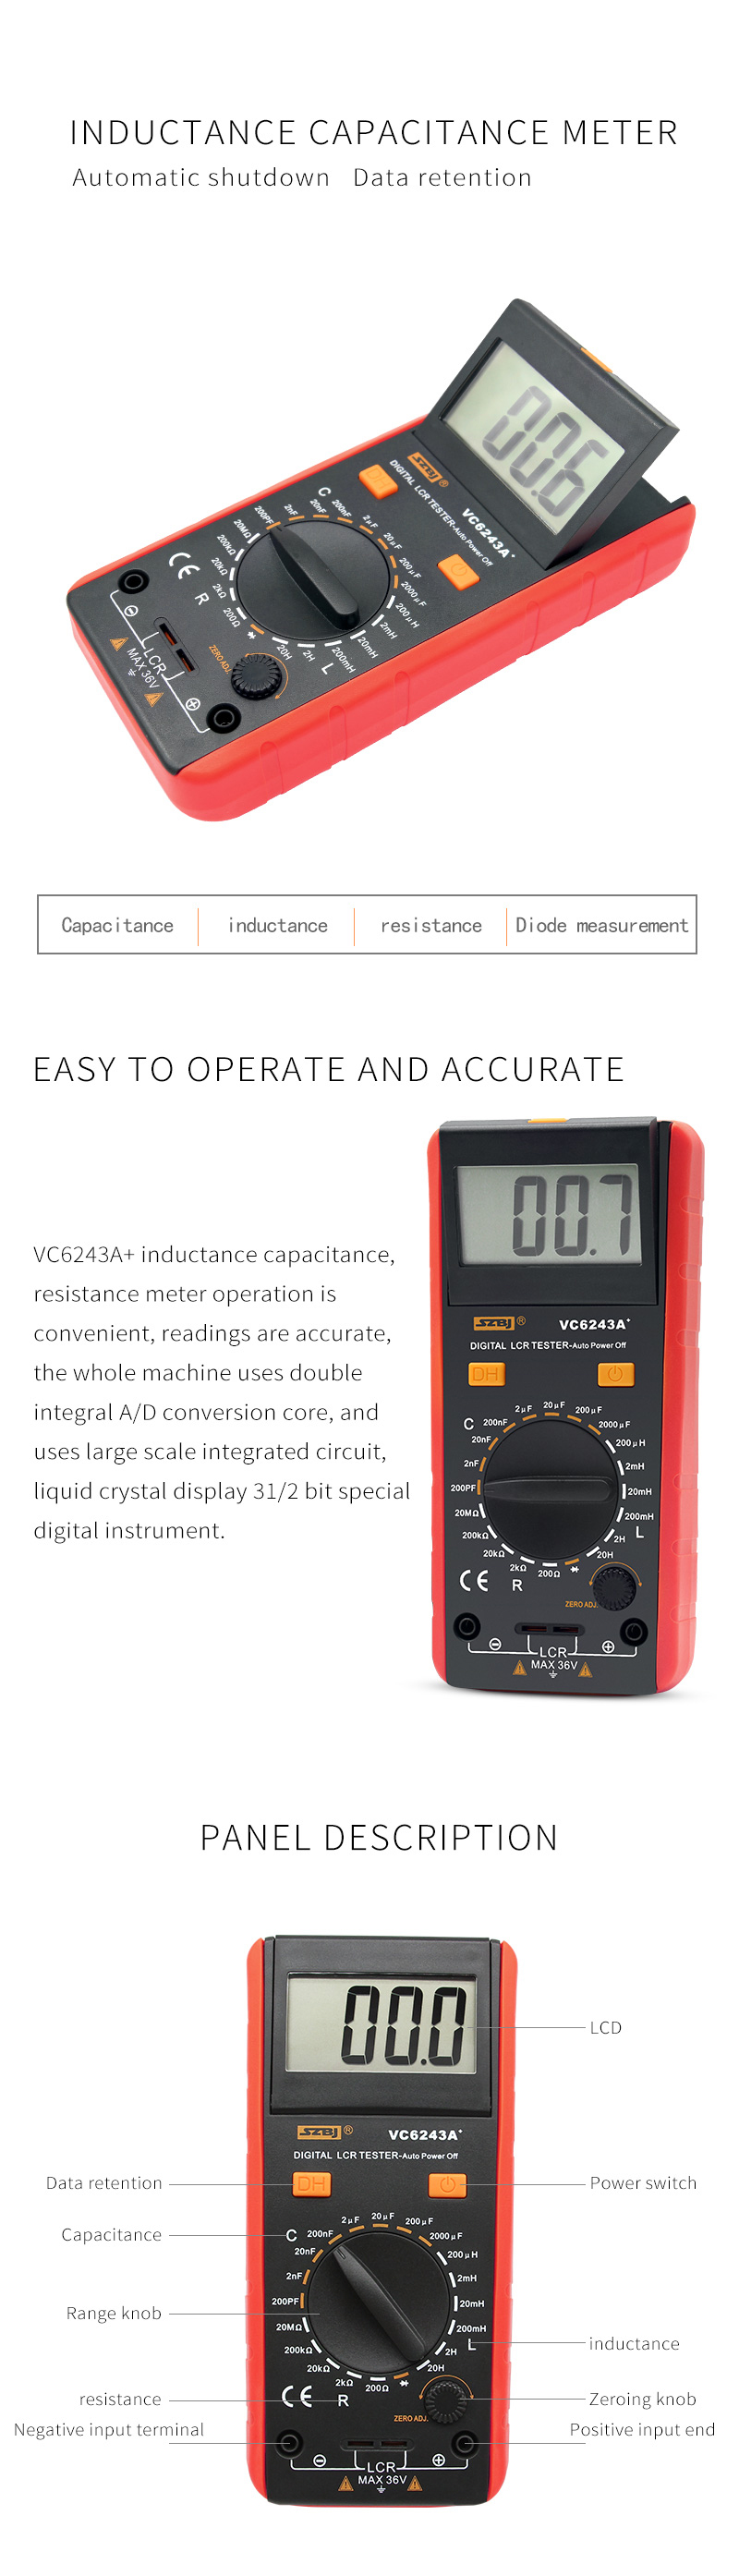 VC6243A-Digital-LCD-Meter-Inductance-Capacitance-Resistance-Tester-Multimeter-Crocodile-Clip-Measuri-1526250-1